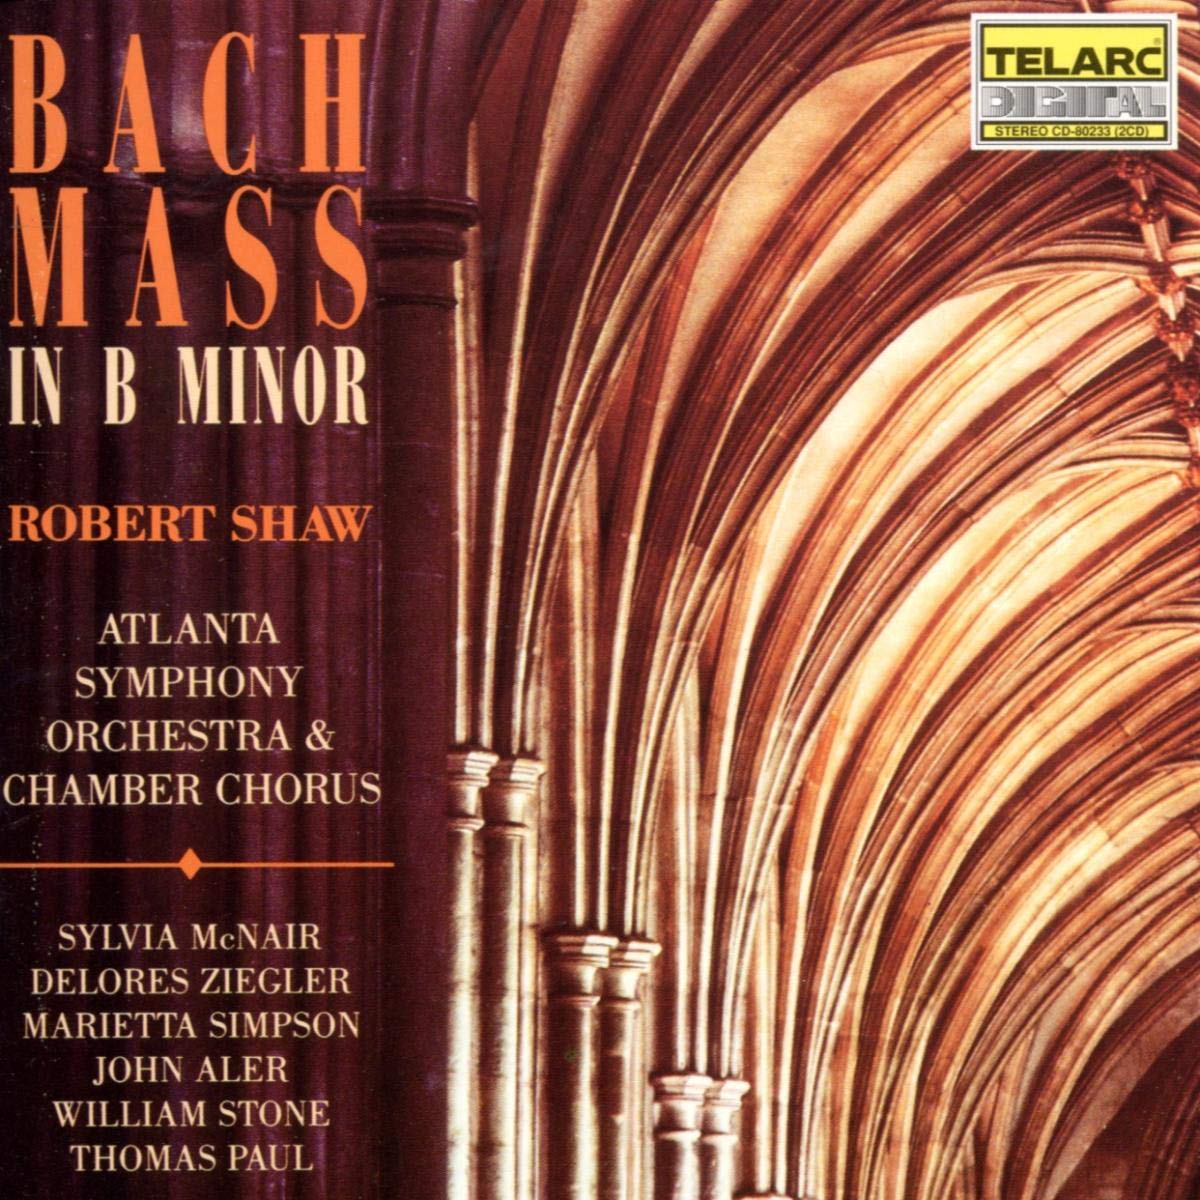 BACH, J.S.: MASS IN B MINOR - Robert Shaw, Atlanta Symphony Orchestra and Chamber Chorus (2 CDs)